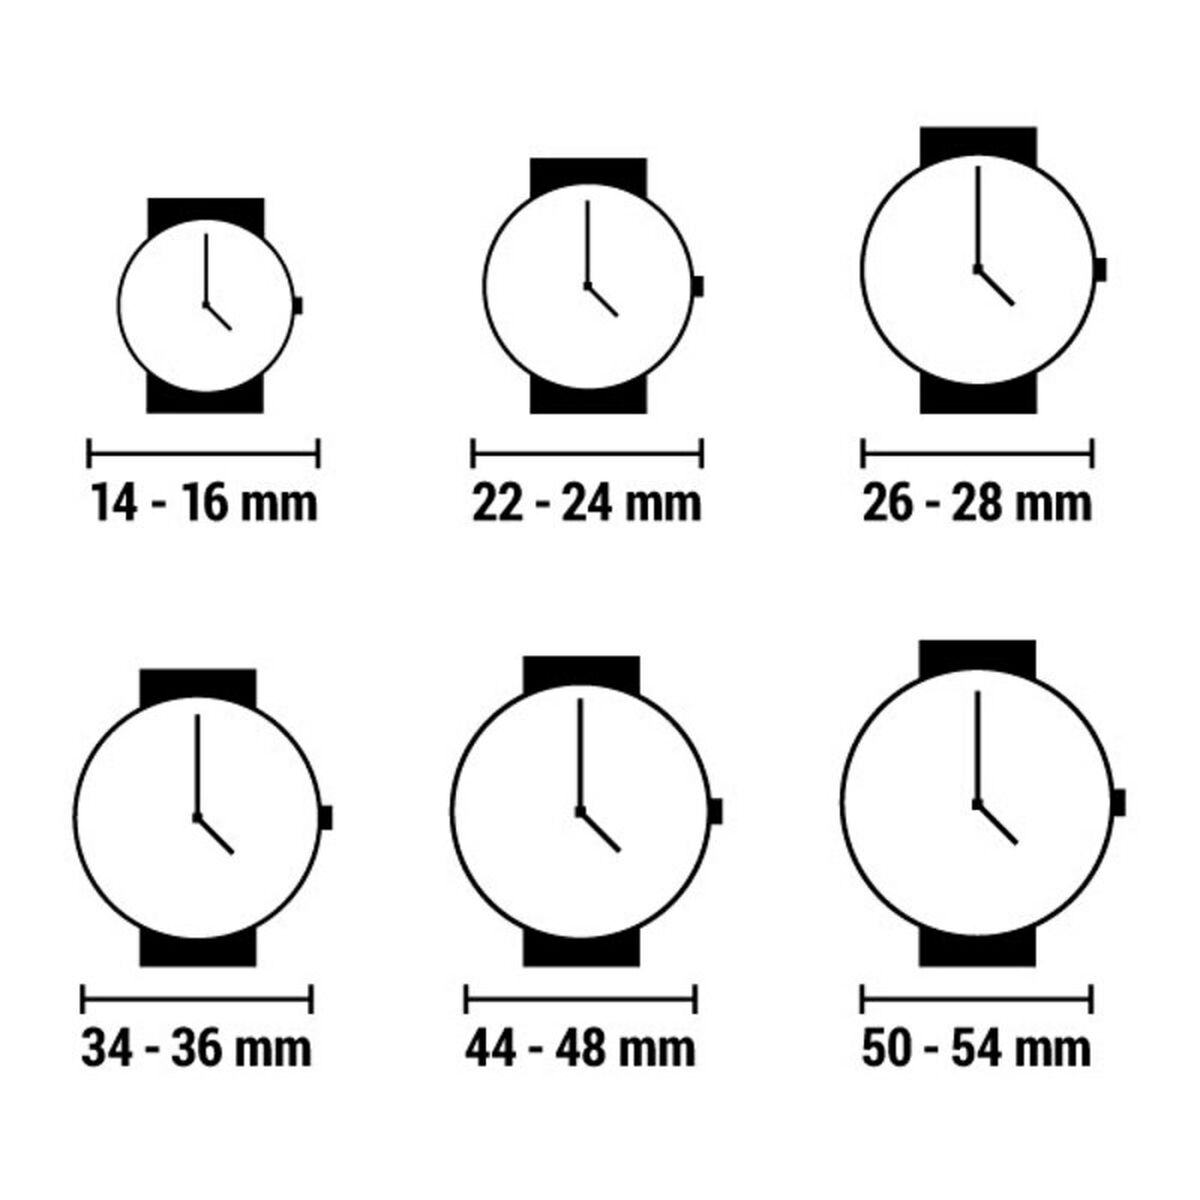 Horloge Dames Laura Biagiotti LB0047-BEIGE (Ø 34 mm)